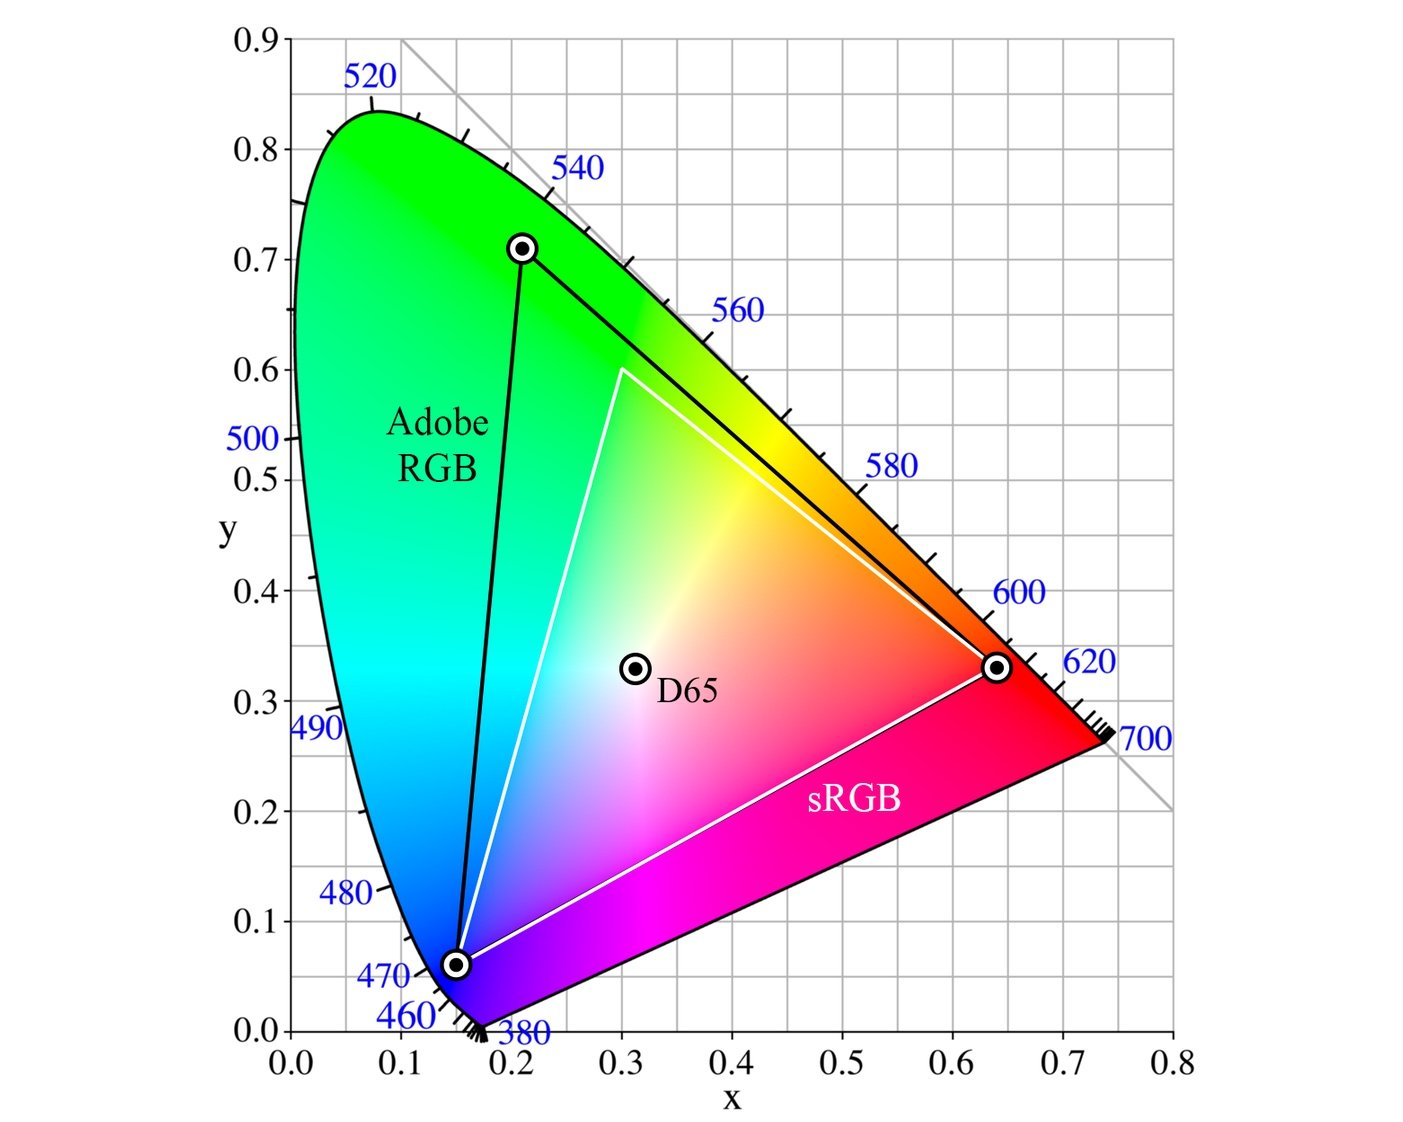 Is Adobe RGB better?